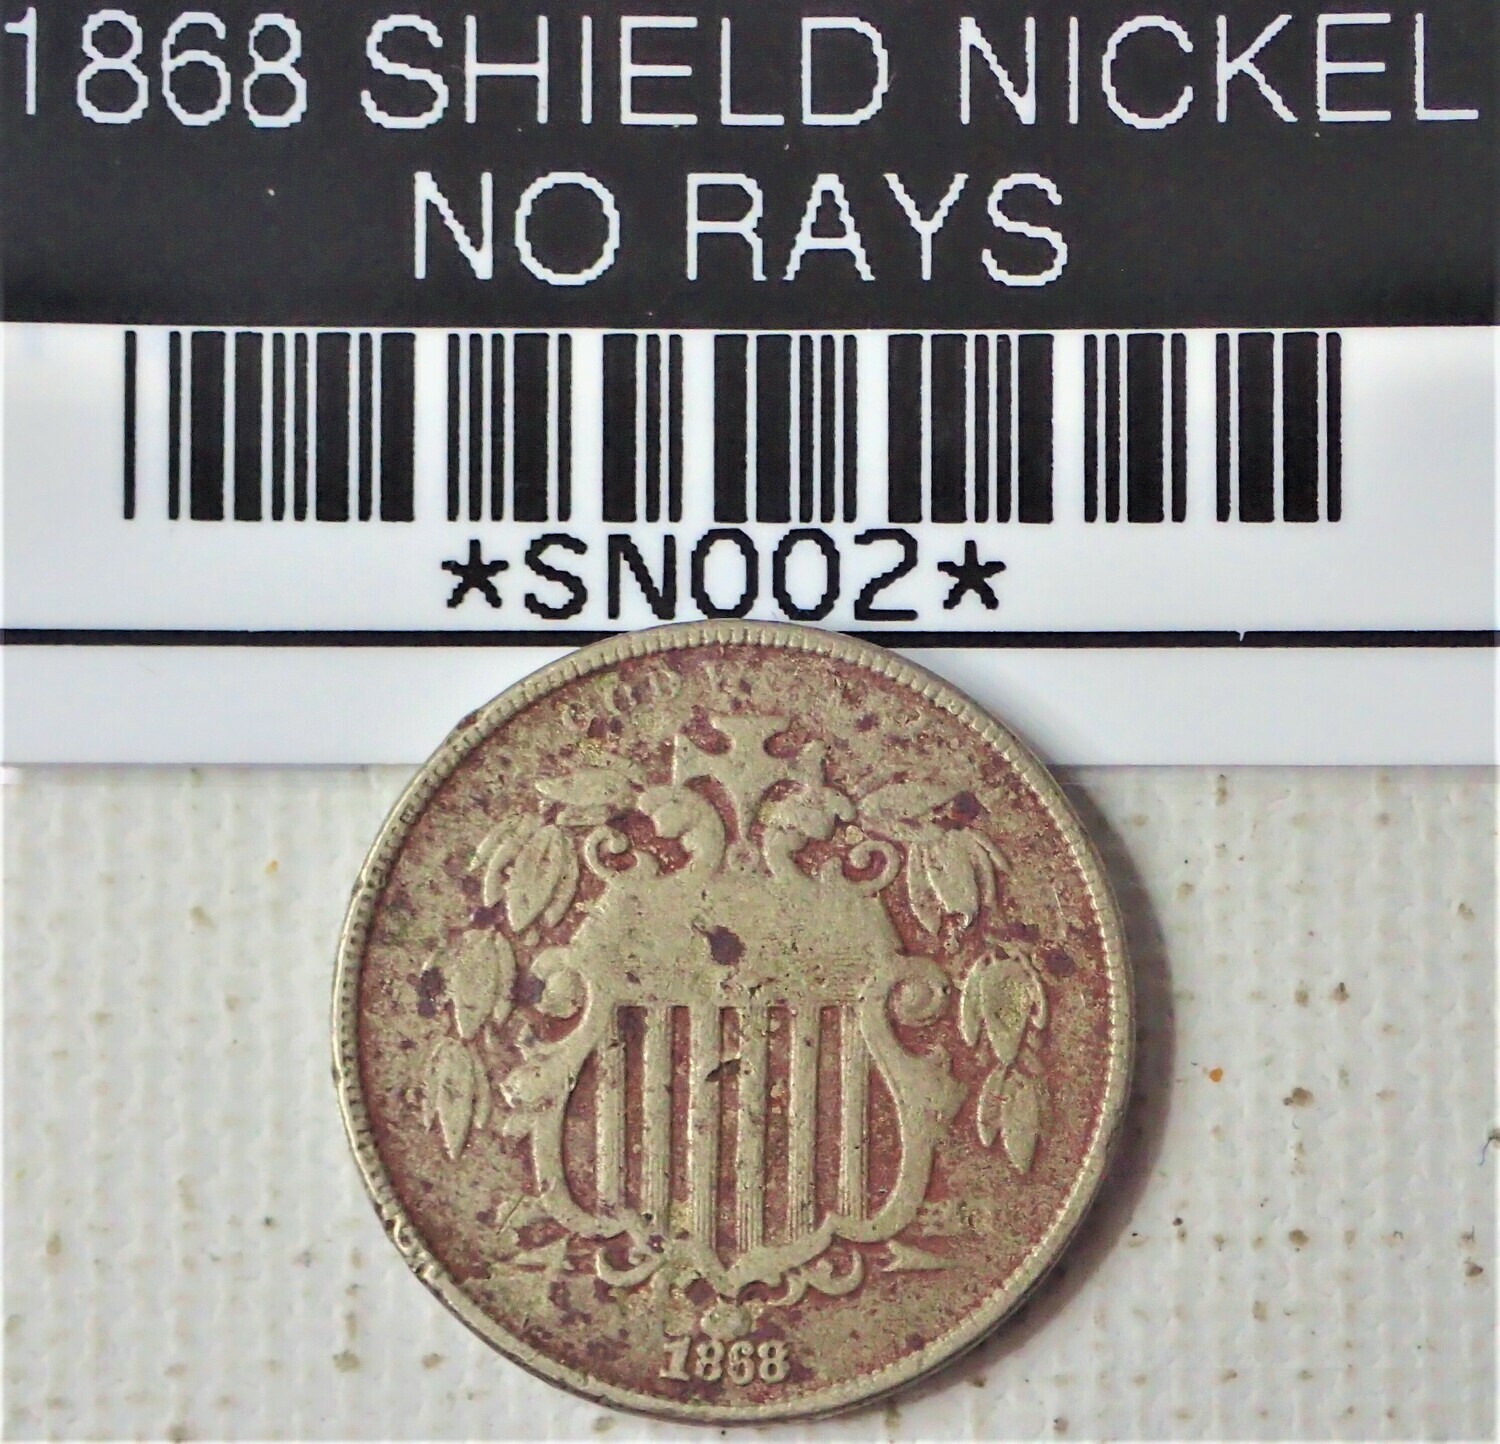 1868 SHIELD NICKEL NO RAYS SN002